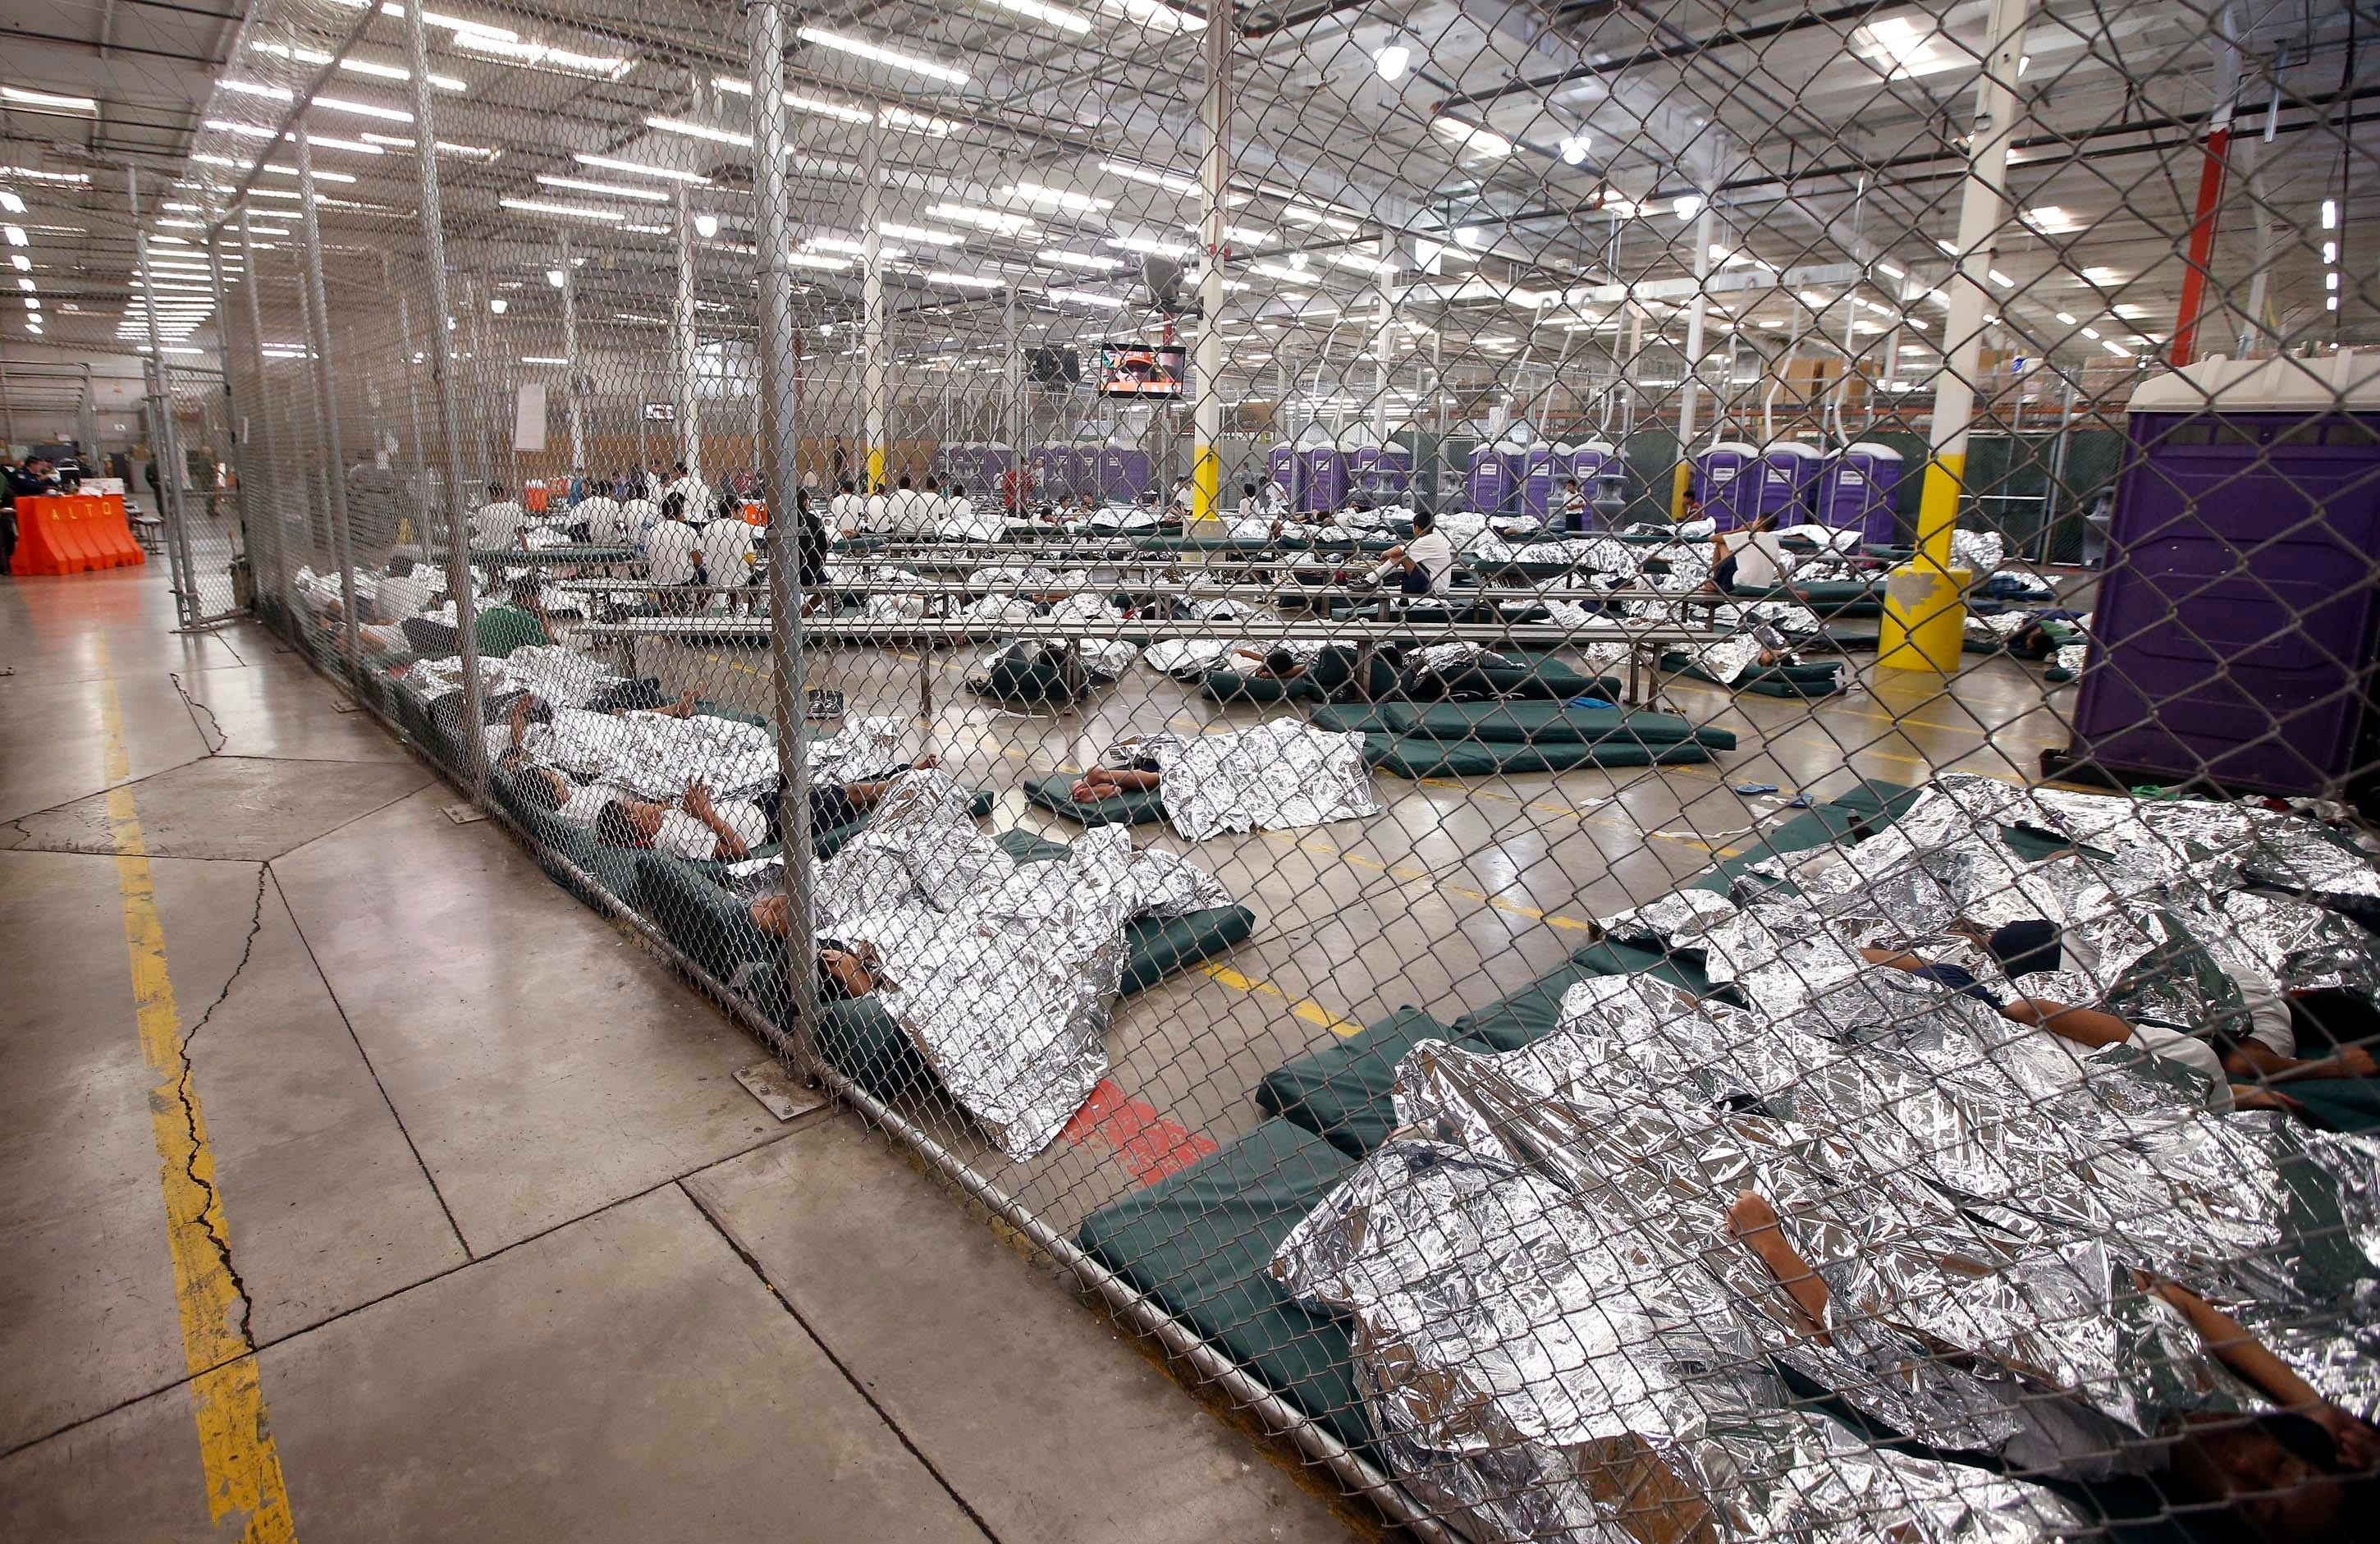 http://www.gannett-cdn.com/media/USATODAY/USATODAY/2014/06/18/1403126178001-AP-Immigration-Overload-002.jpg